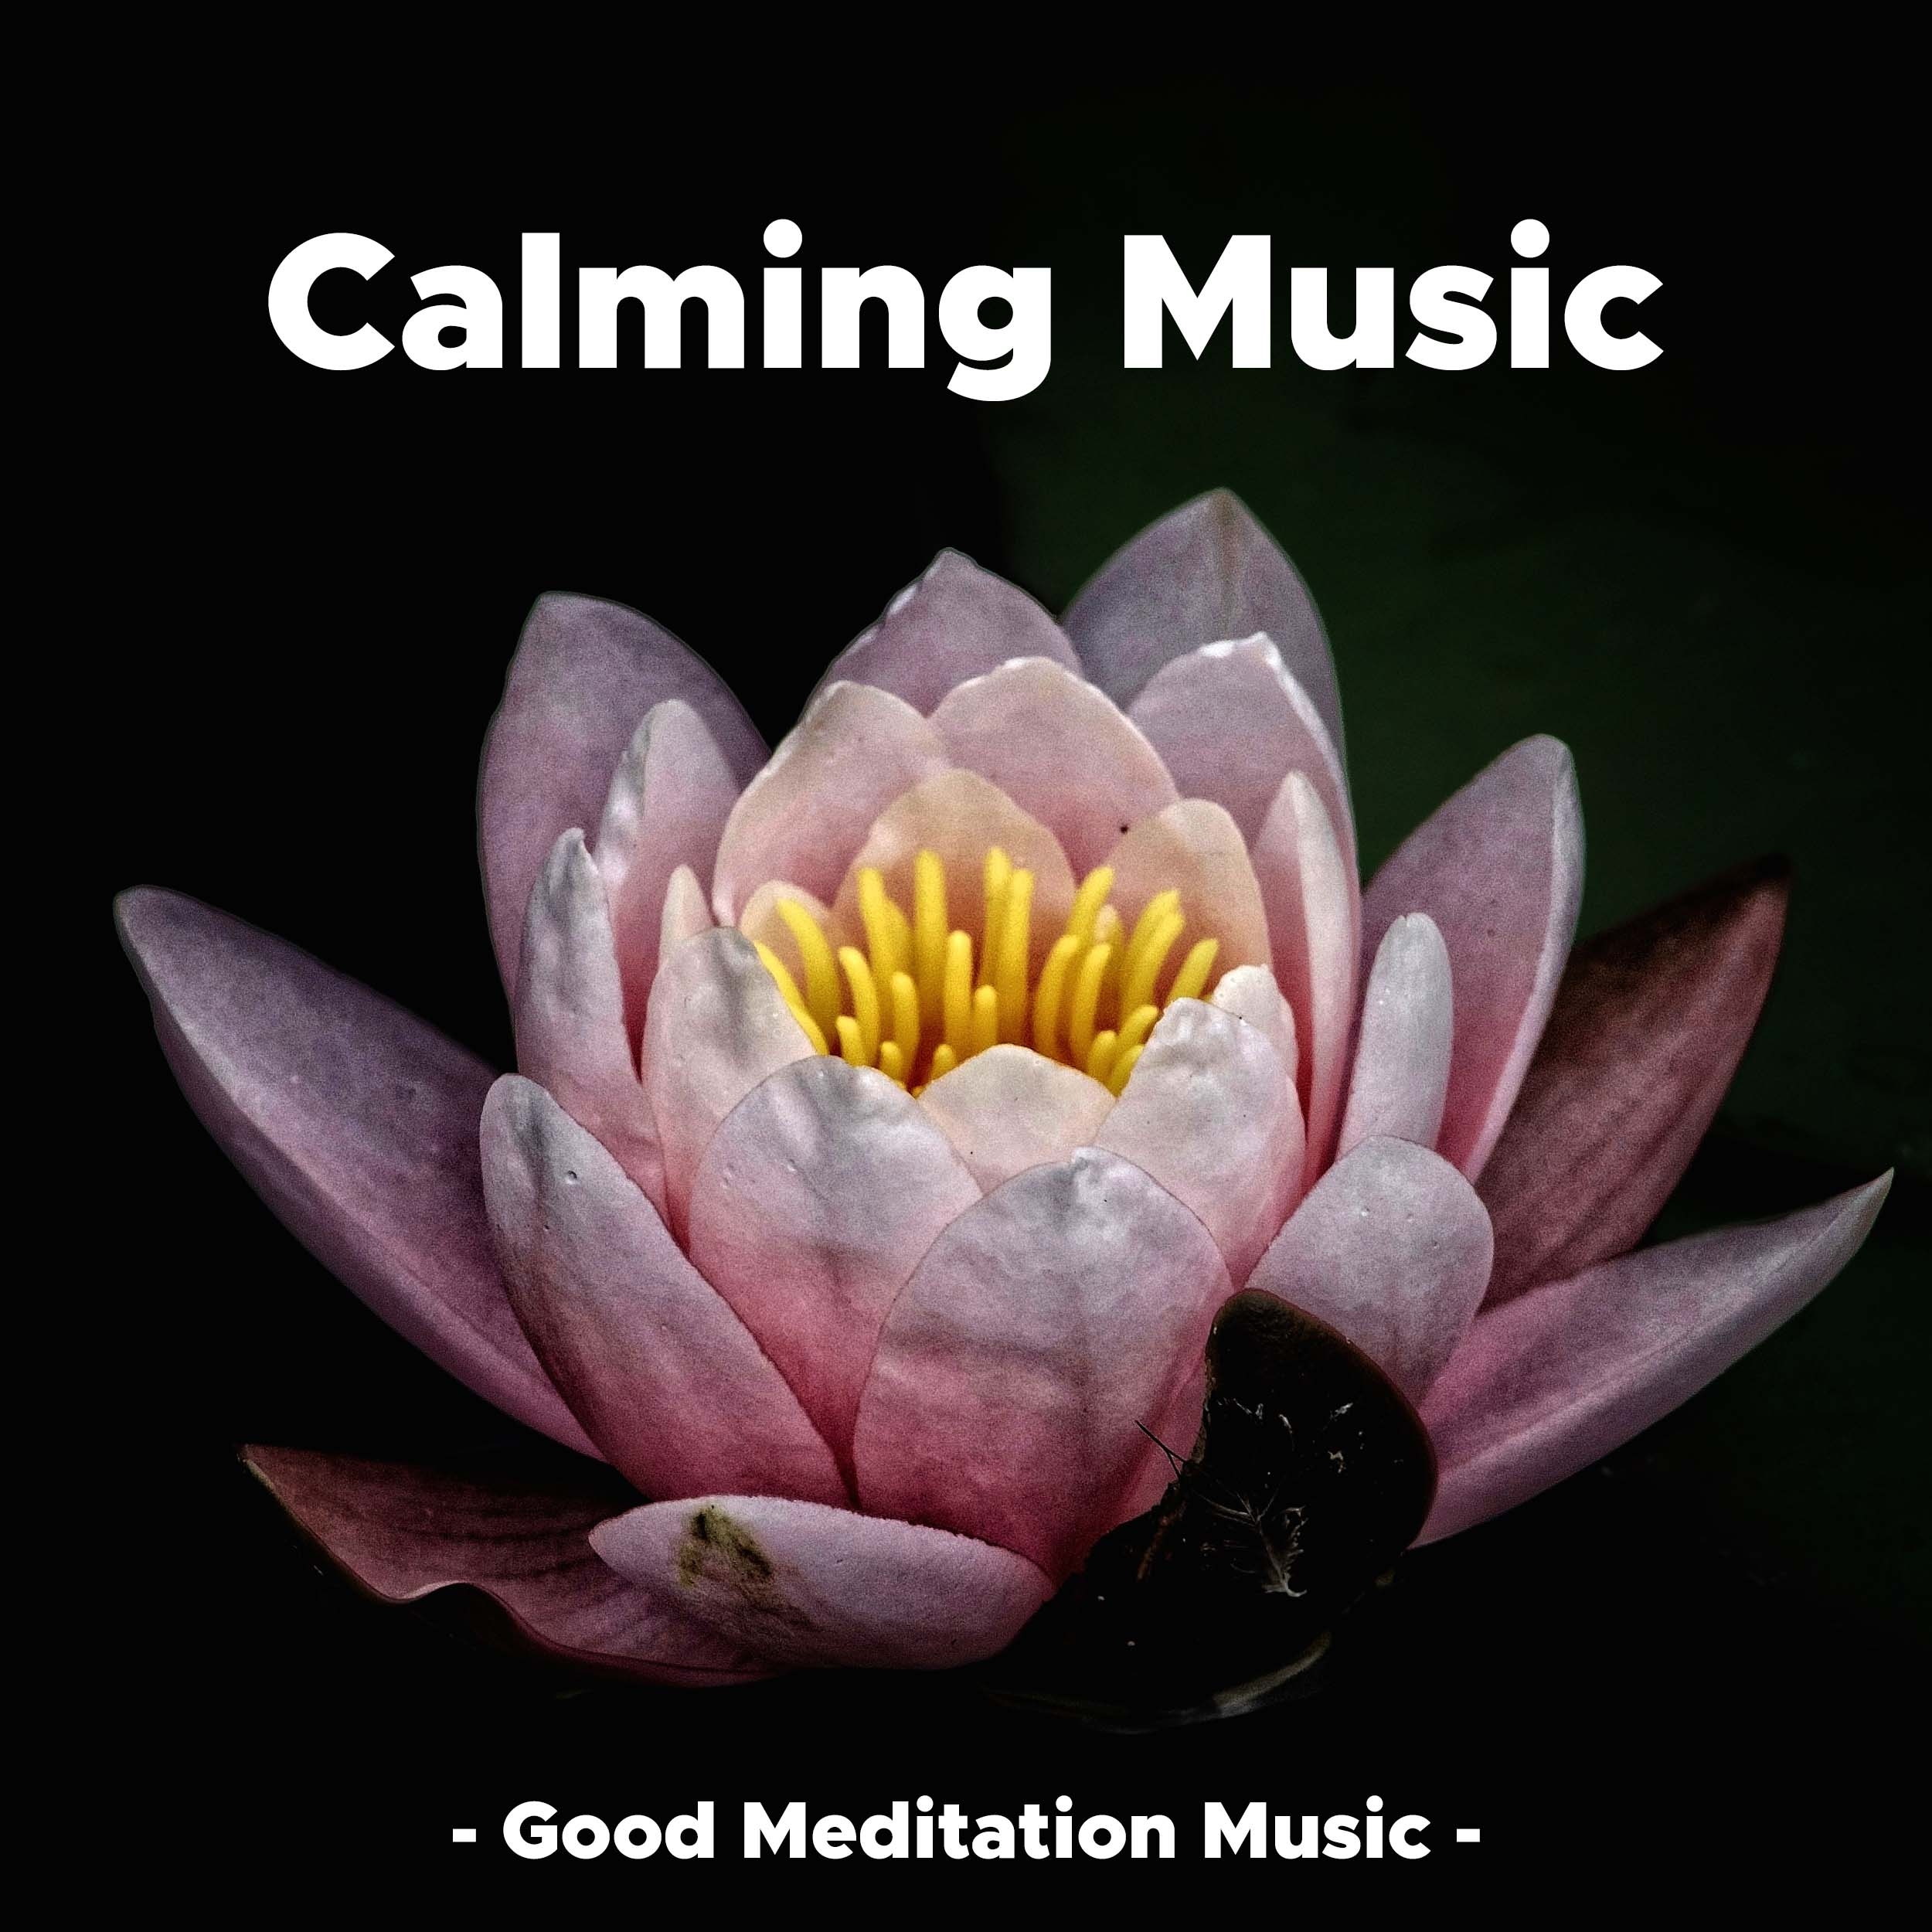 Calming Music - Good Meditation Music